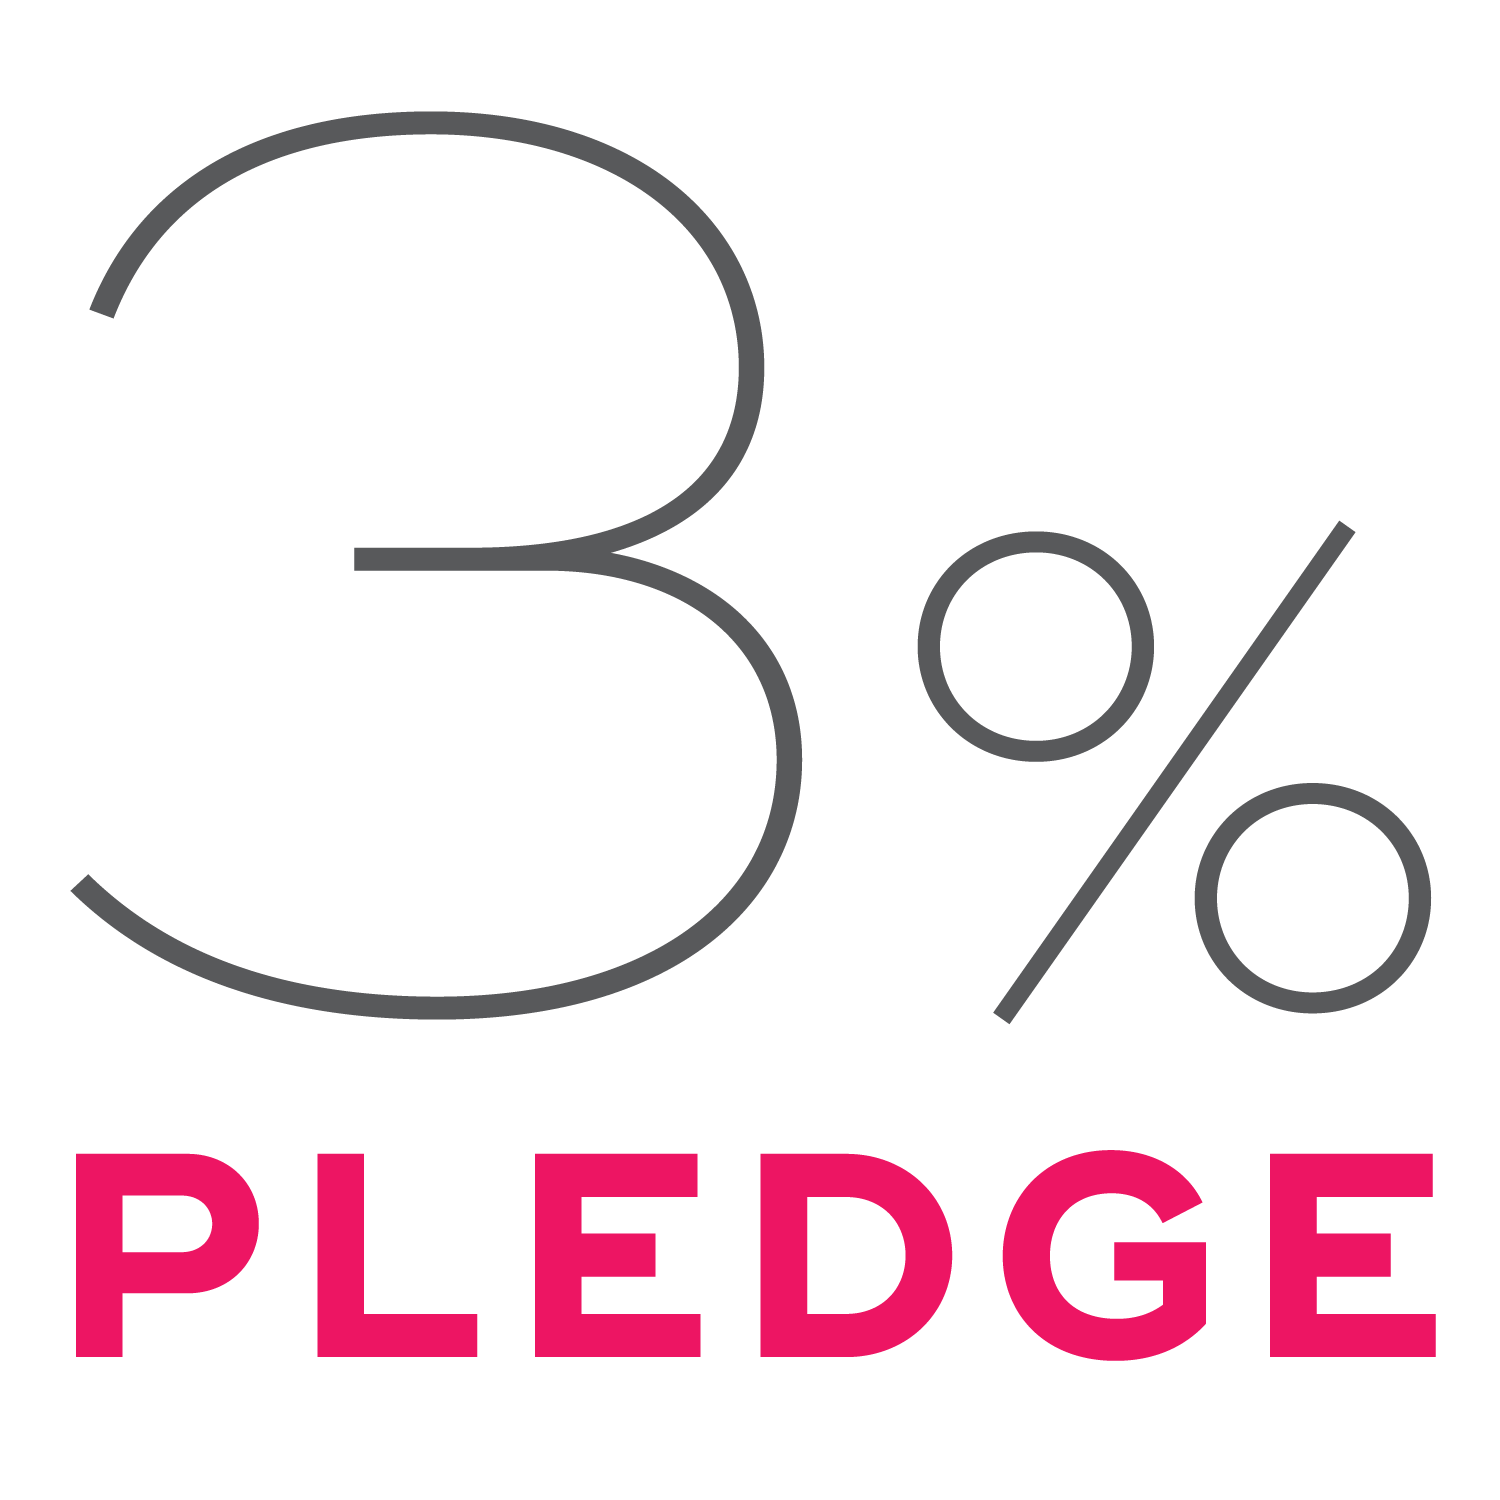 3% Pledge Graphic